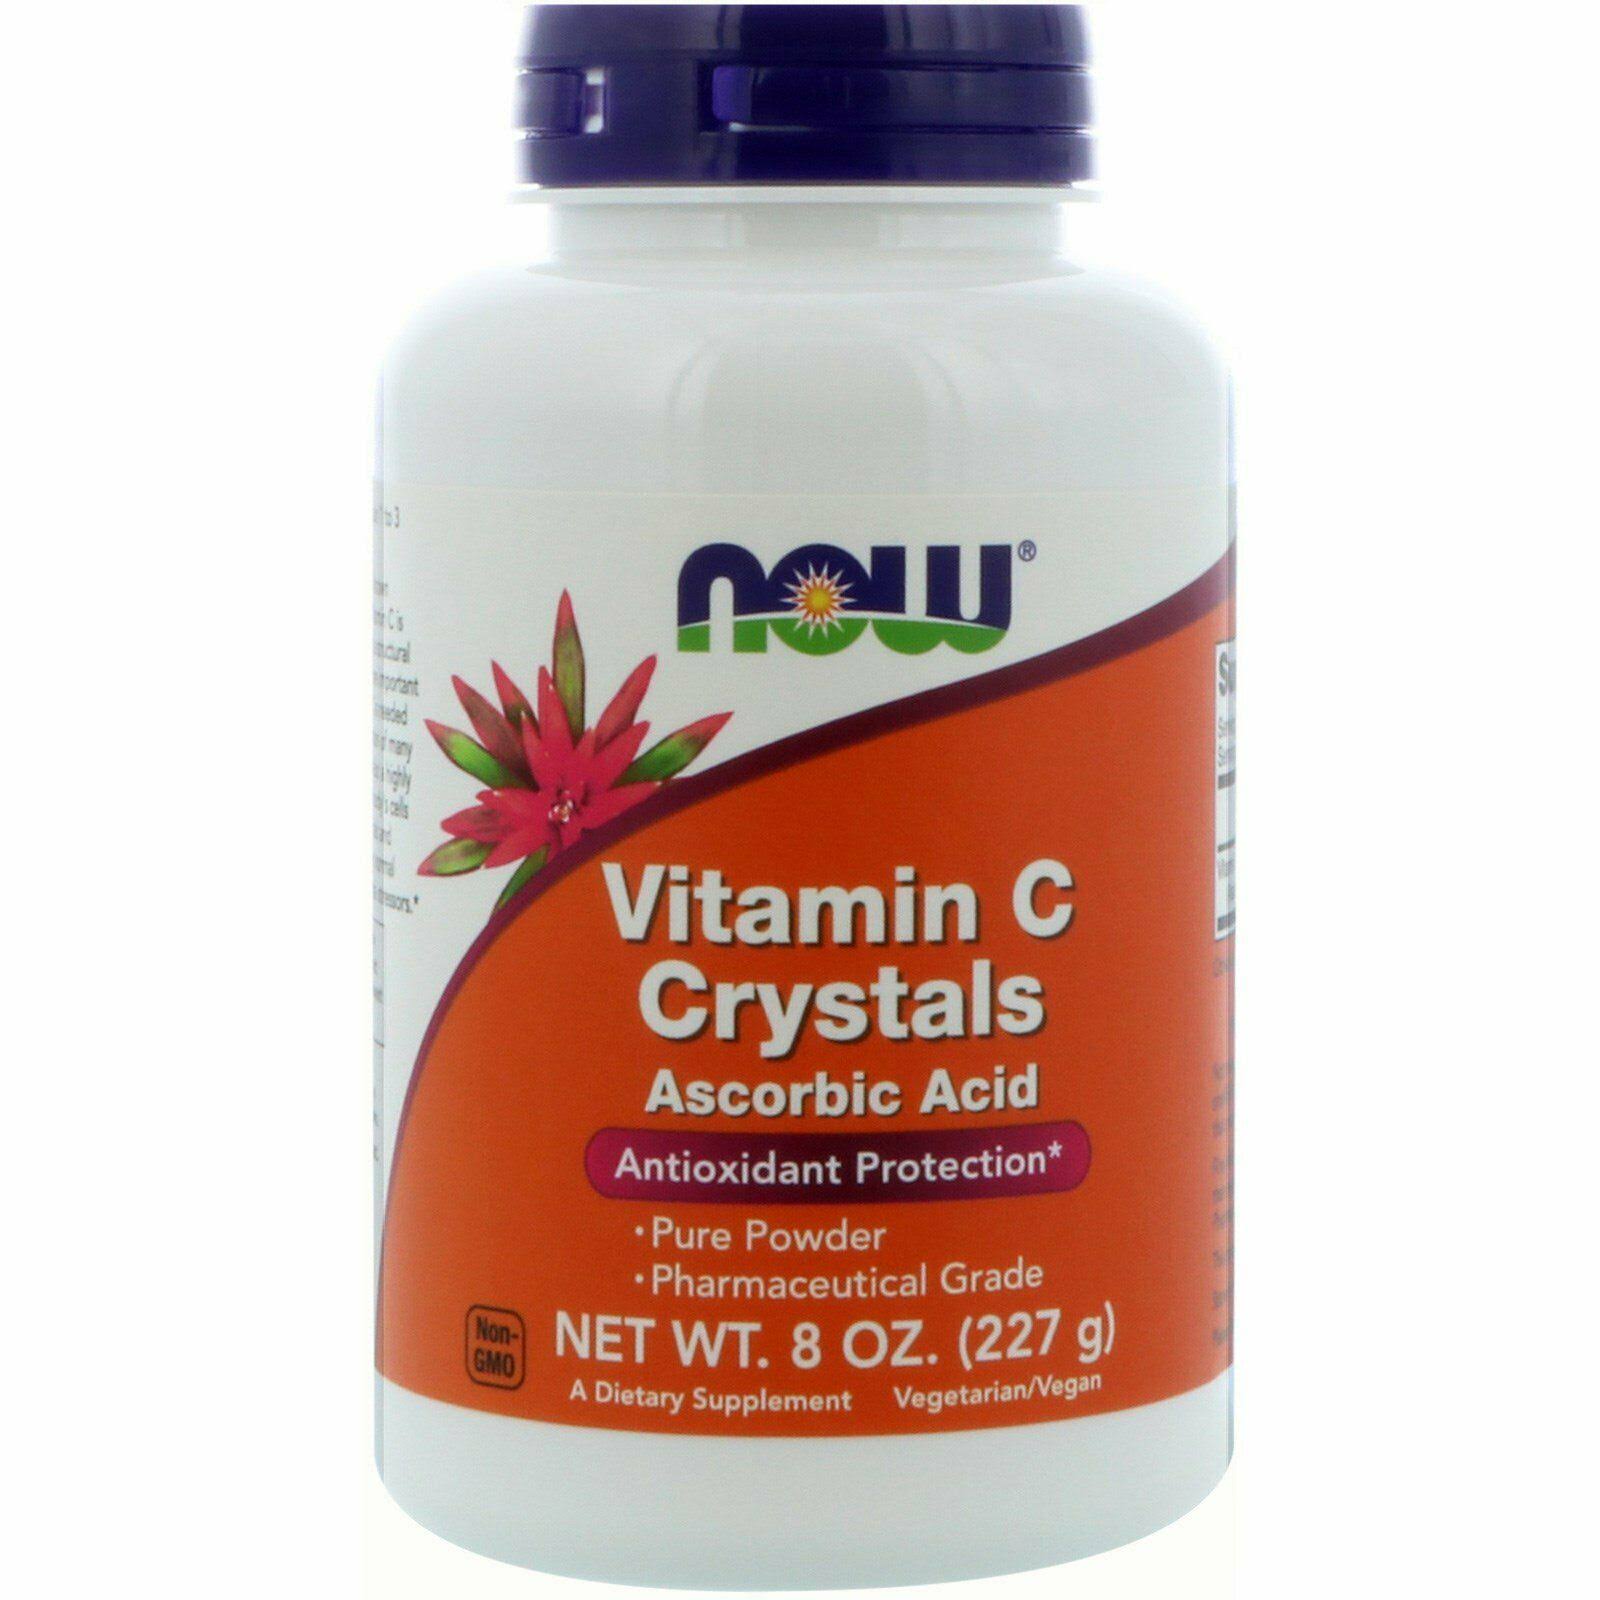 Now Vitamin C Crystals